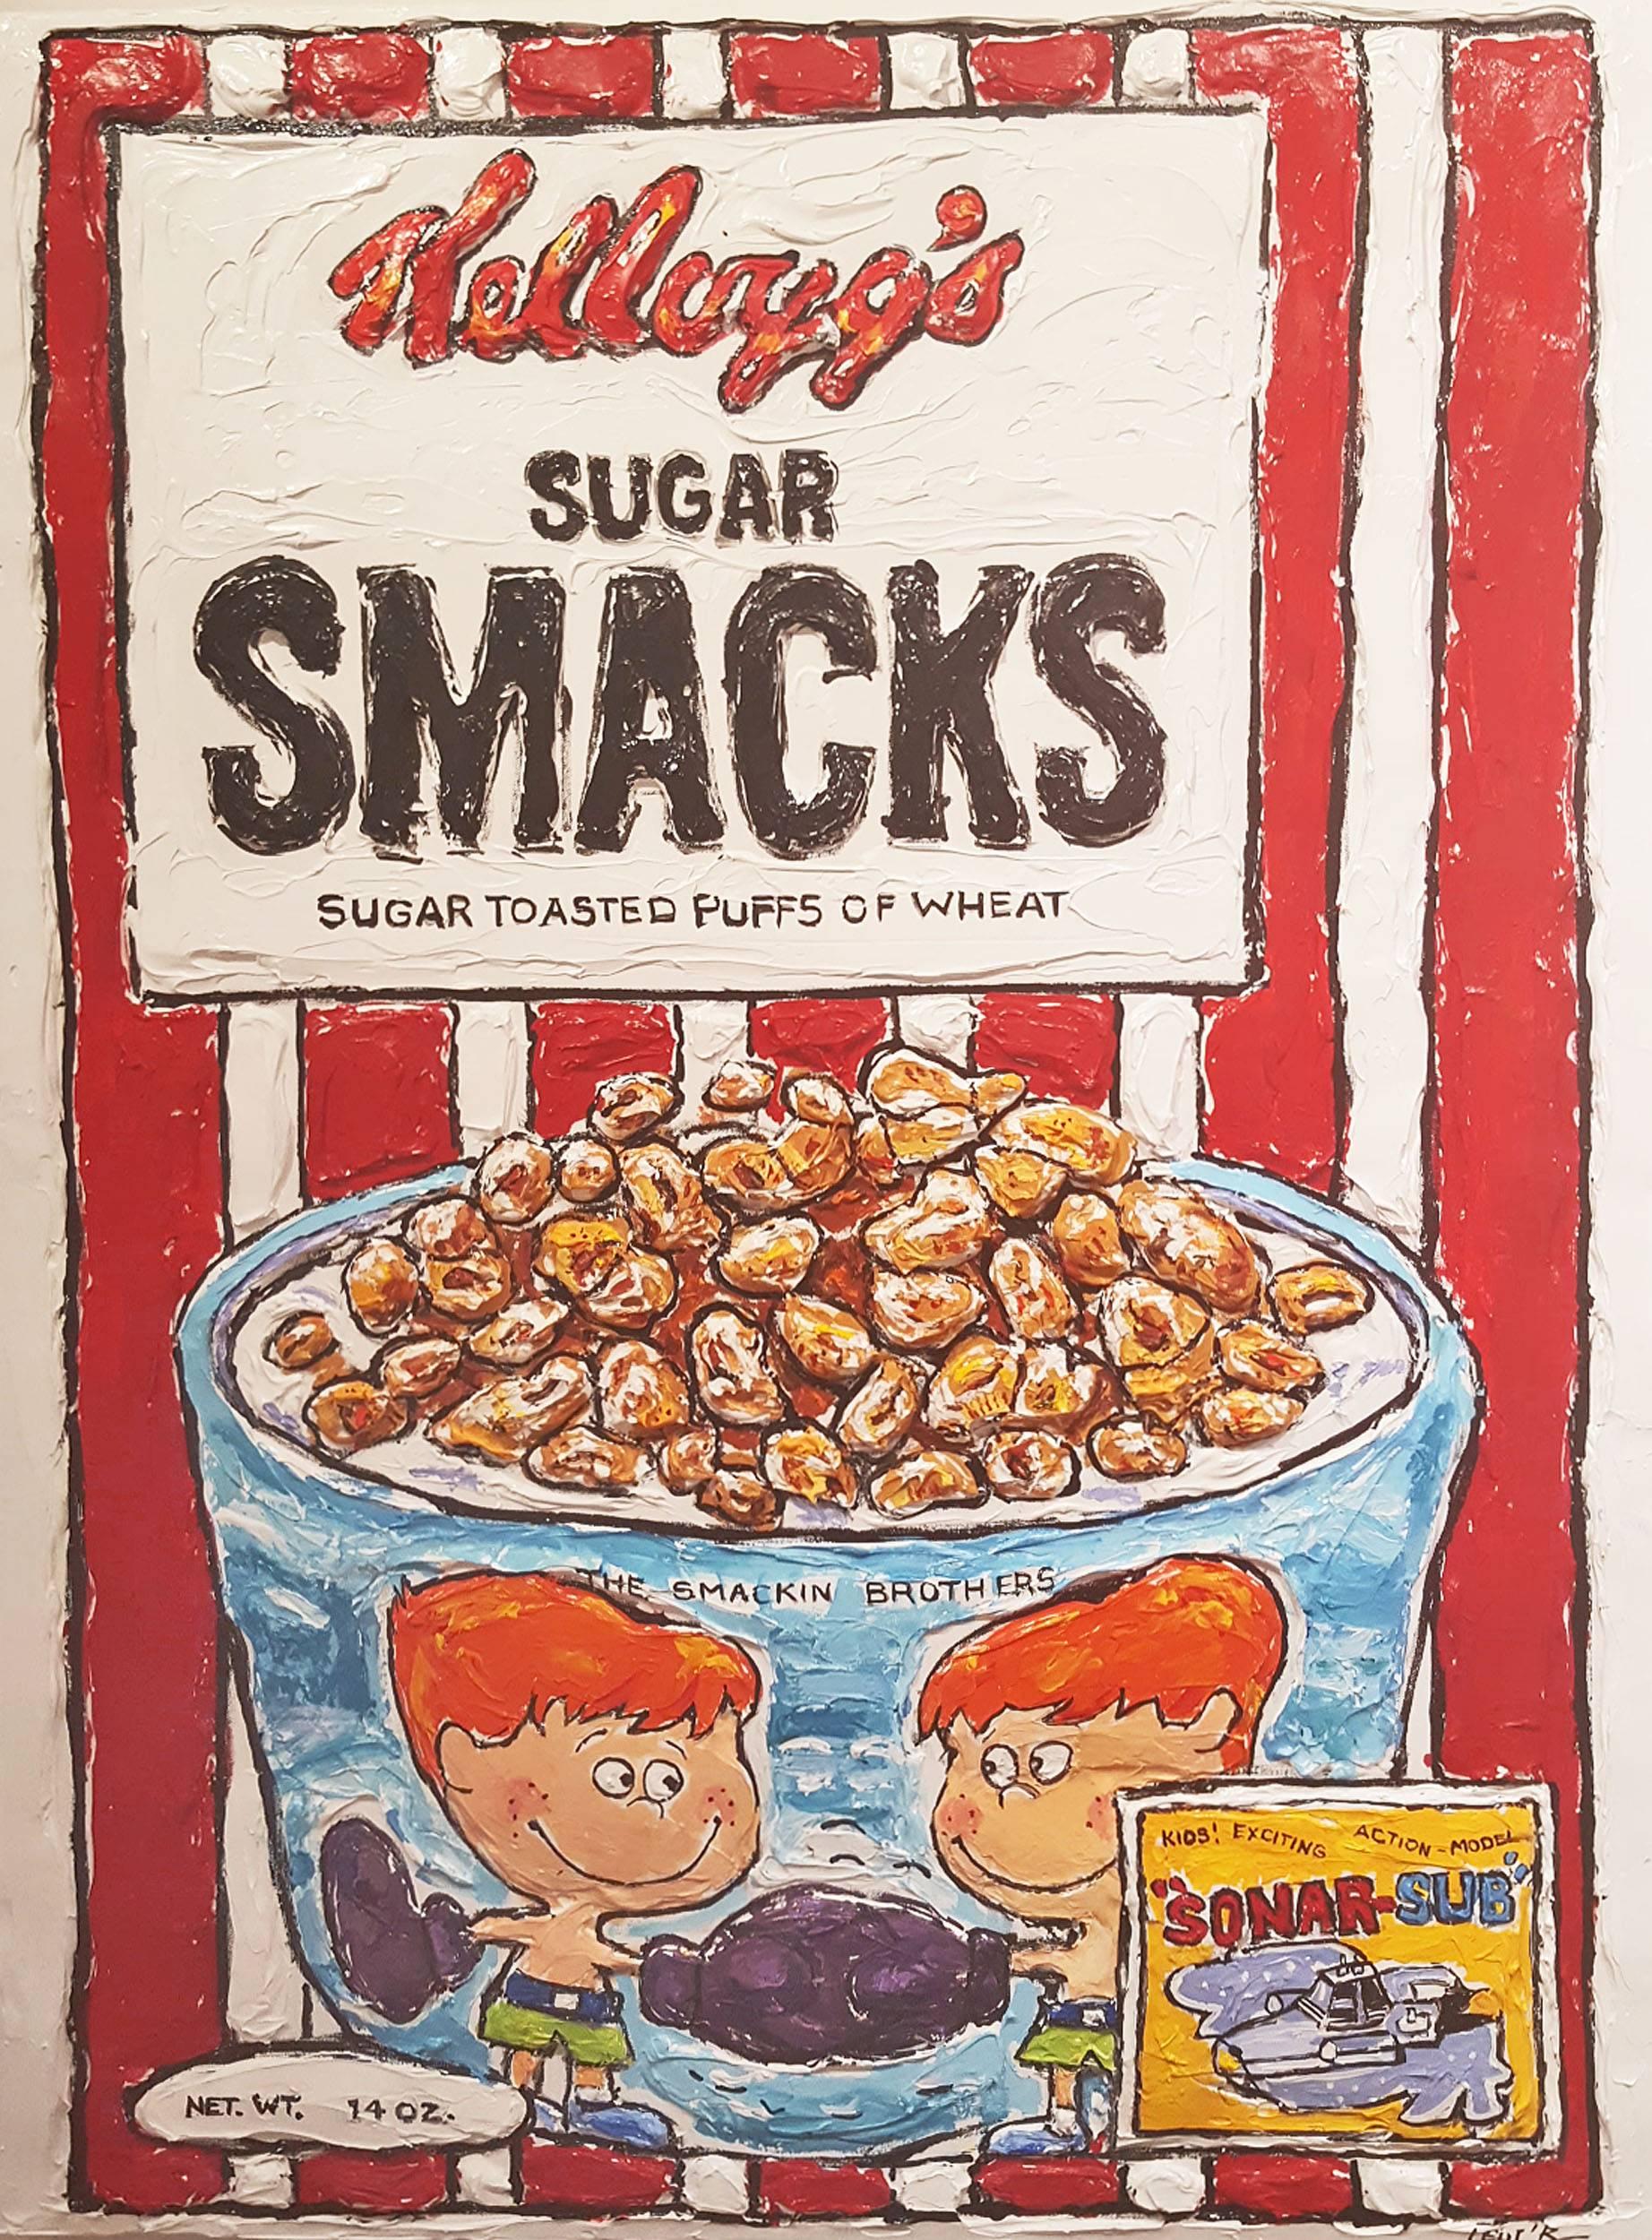 Sugar Smacks and The Smackin' Brothers